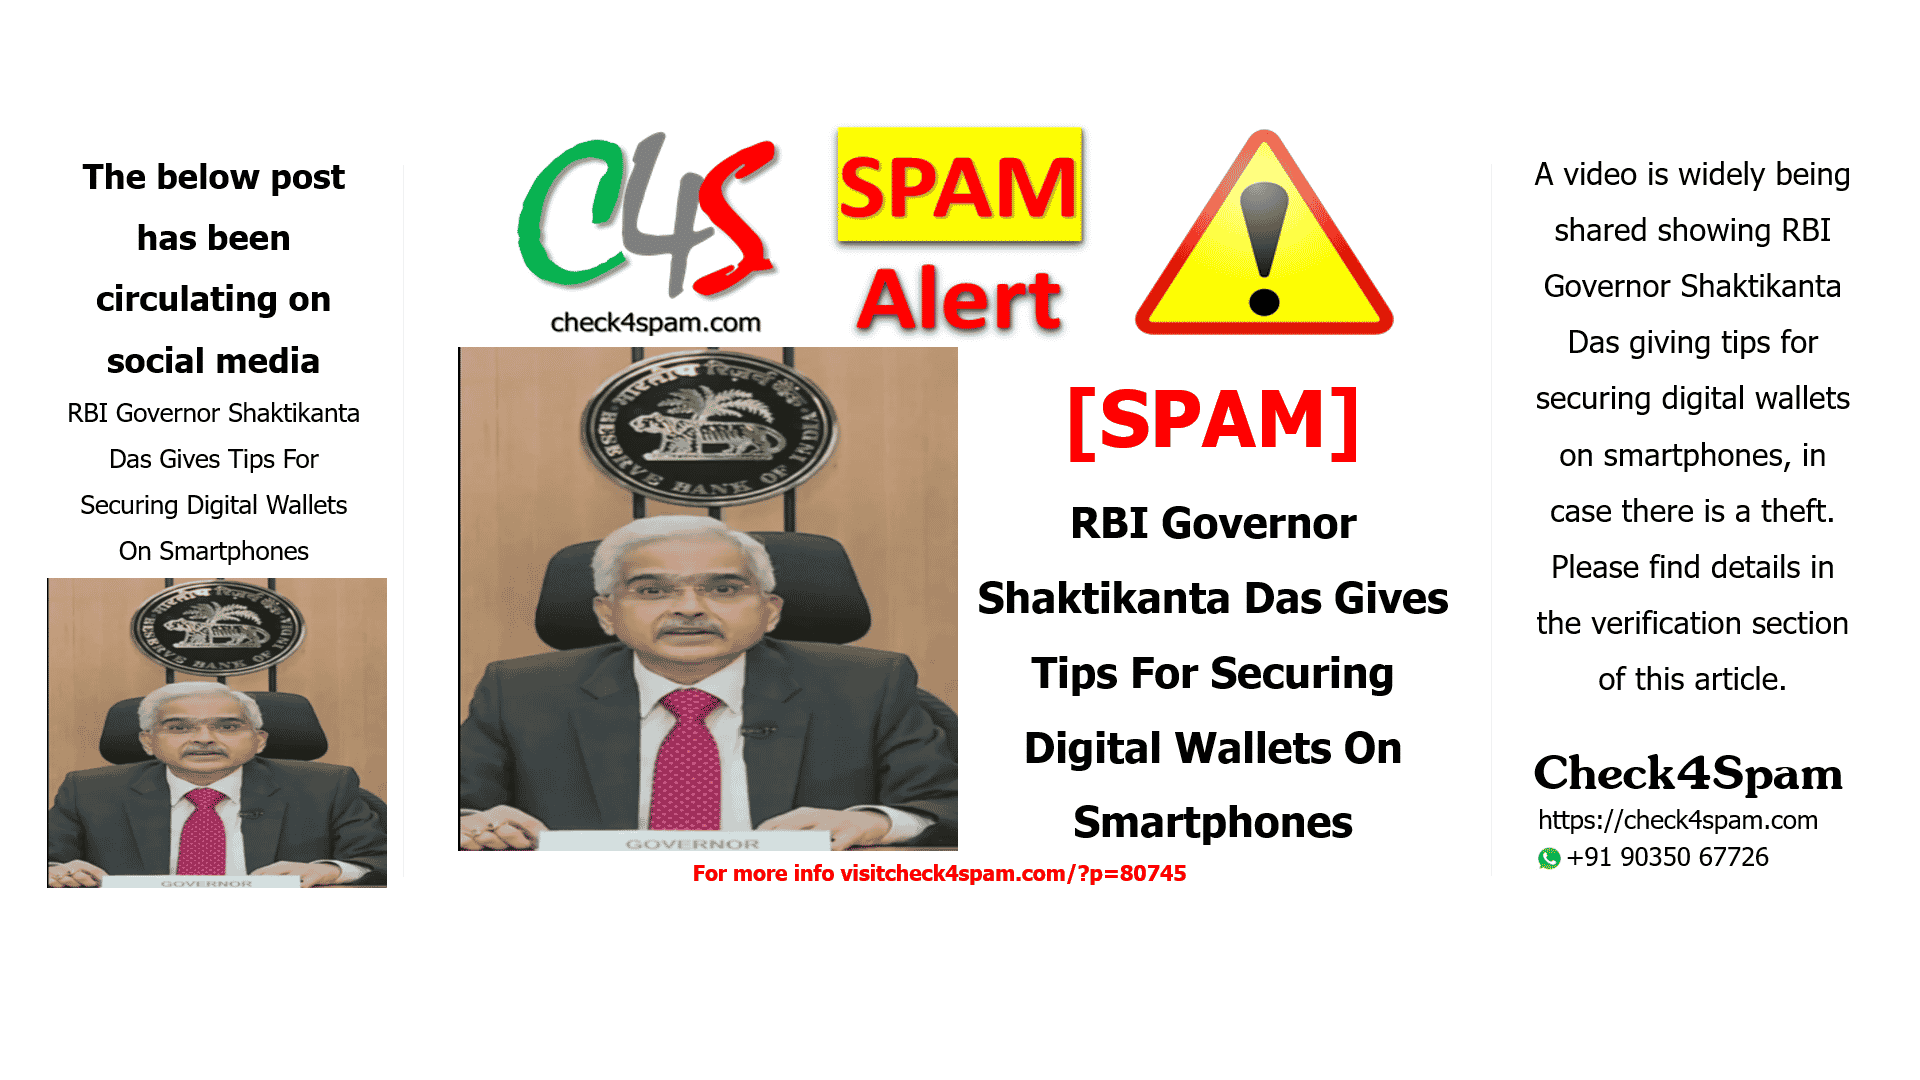 RBI Governor Shaktikanta Das Gives Tips For Securing Digital Wallets On Smartphones